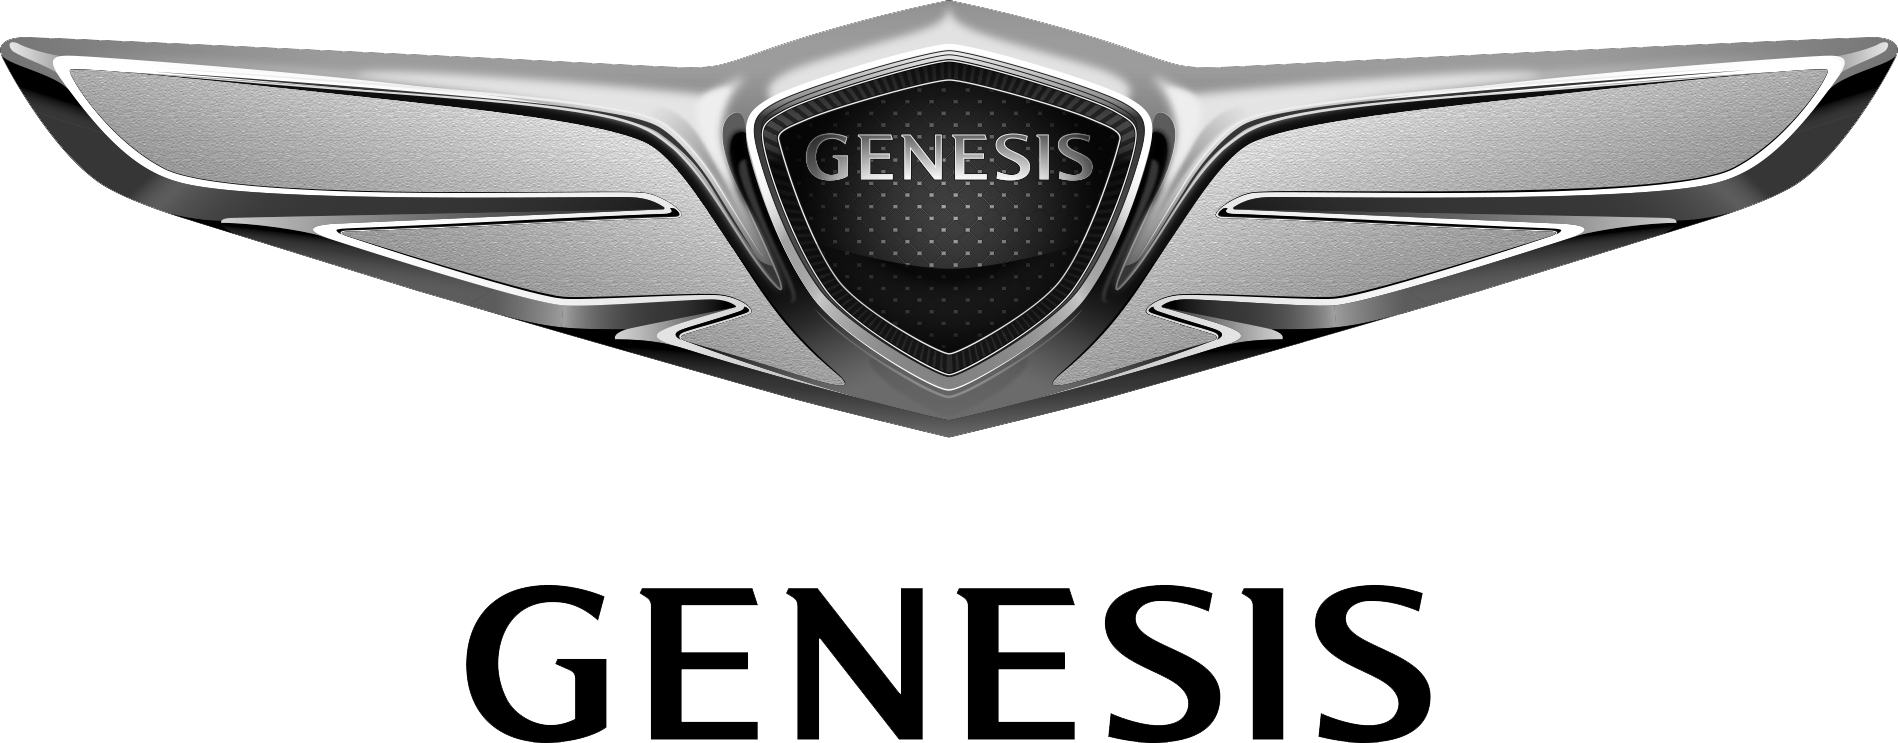 Hyundai Genesis Logo Png Image